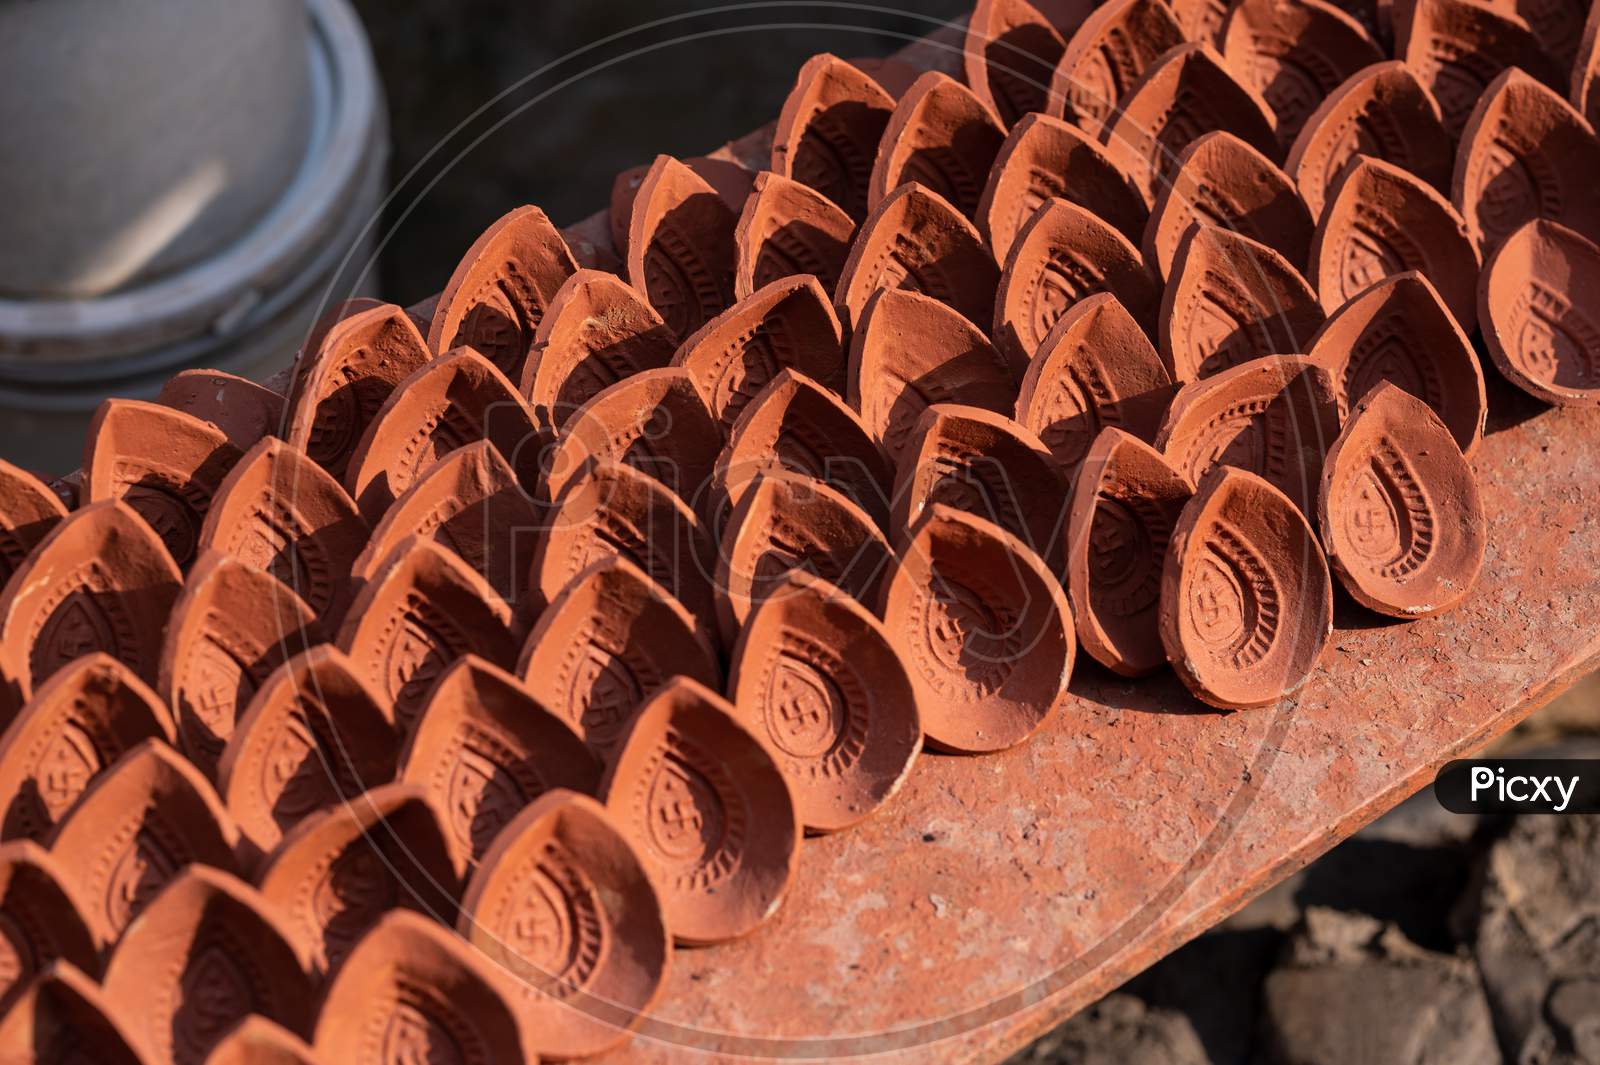 Traditional diya made of clay and mud placed in sunlight at Diya factory in Rural India.